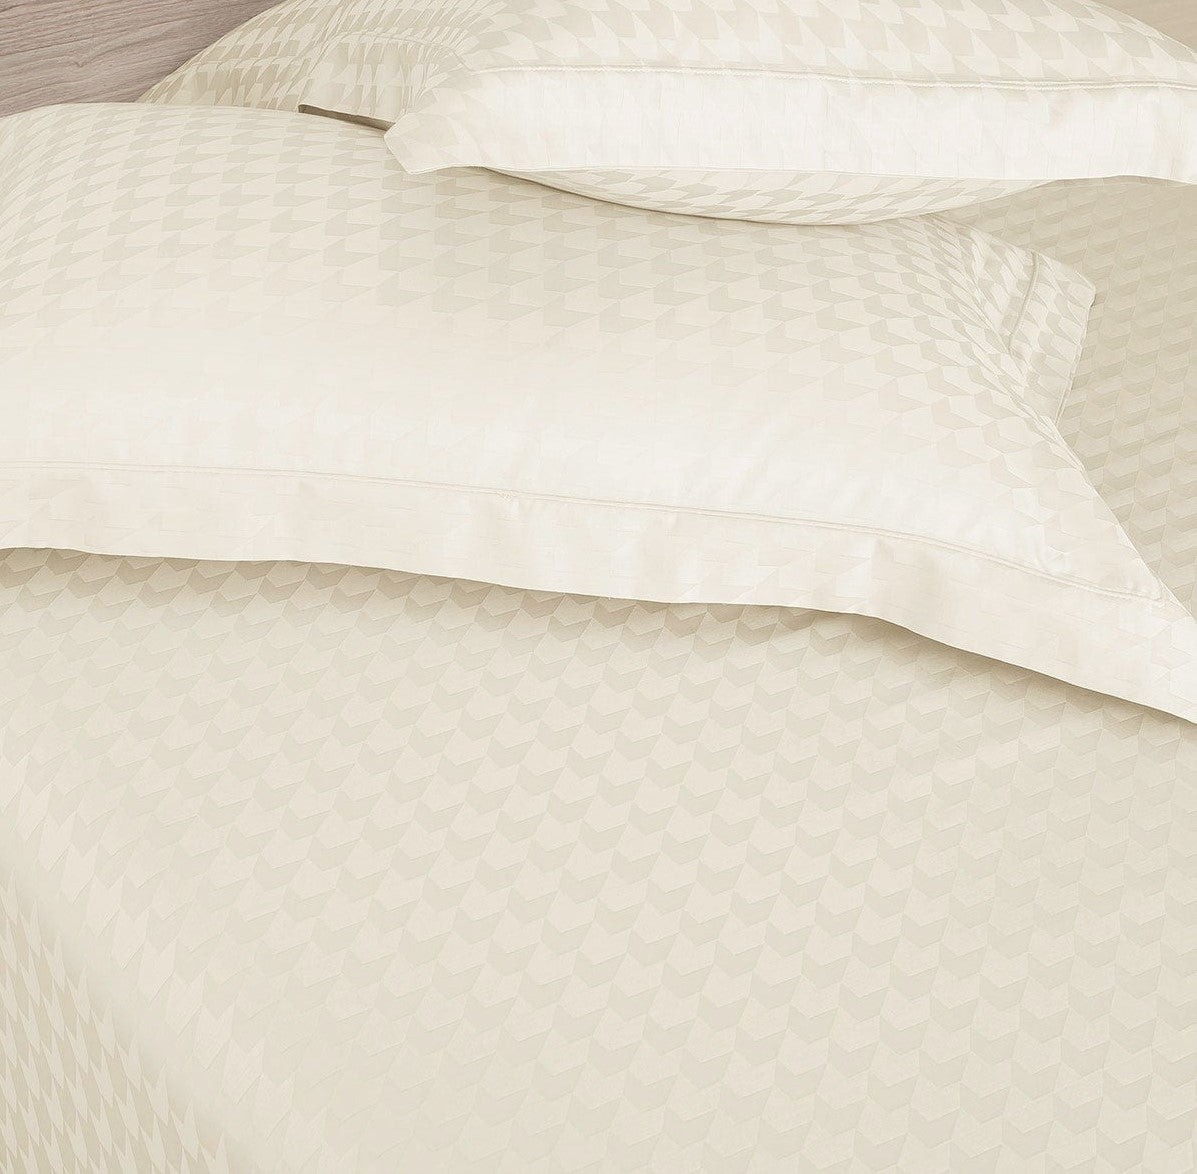 550 TC Italian Jacquard 100% Cotton Bedsheet